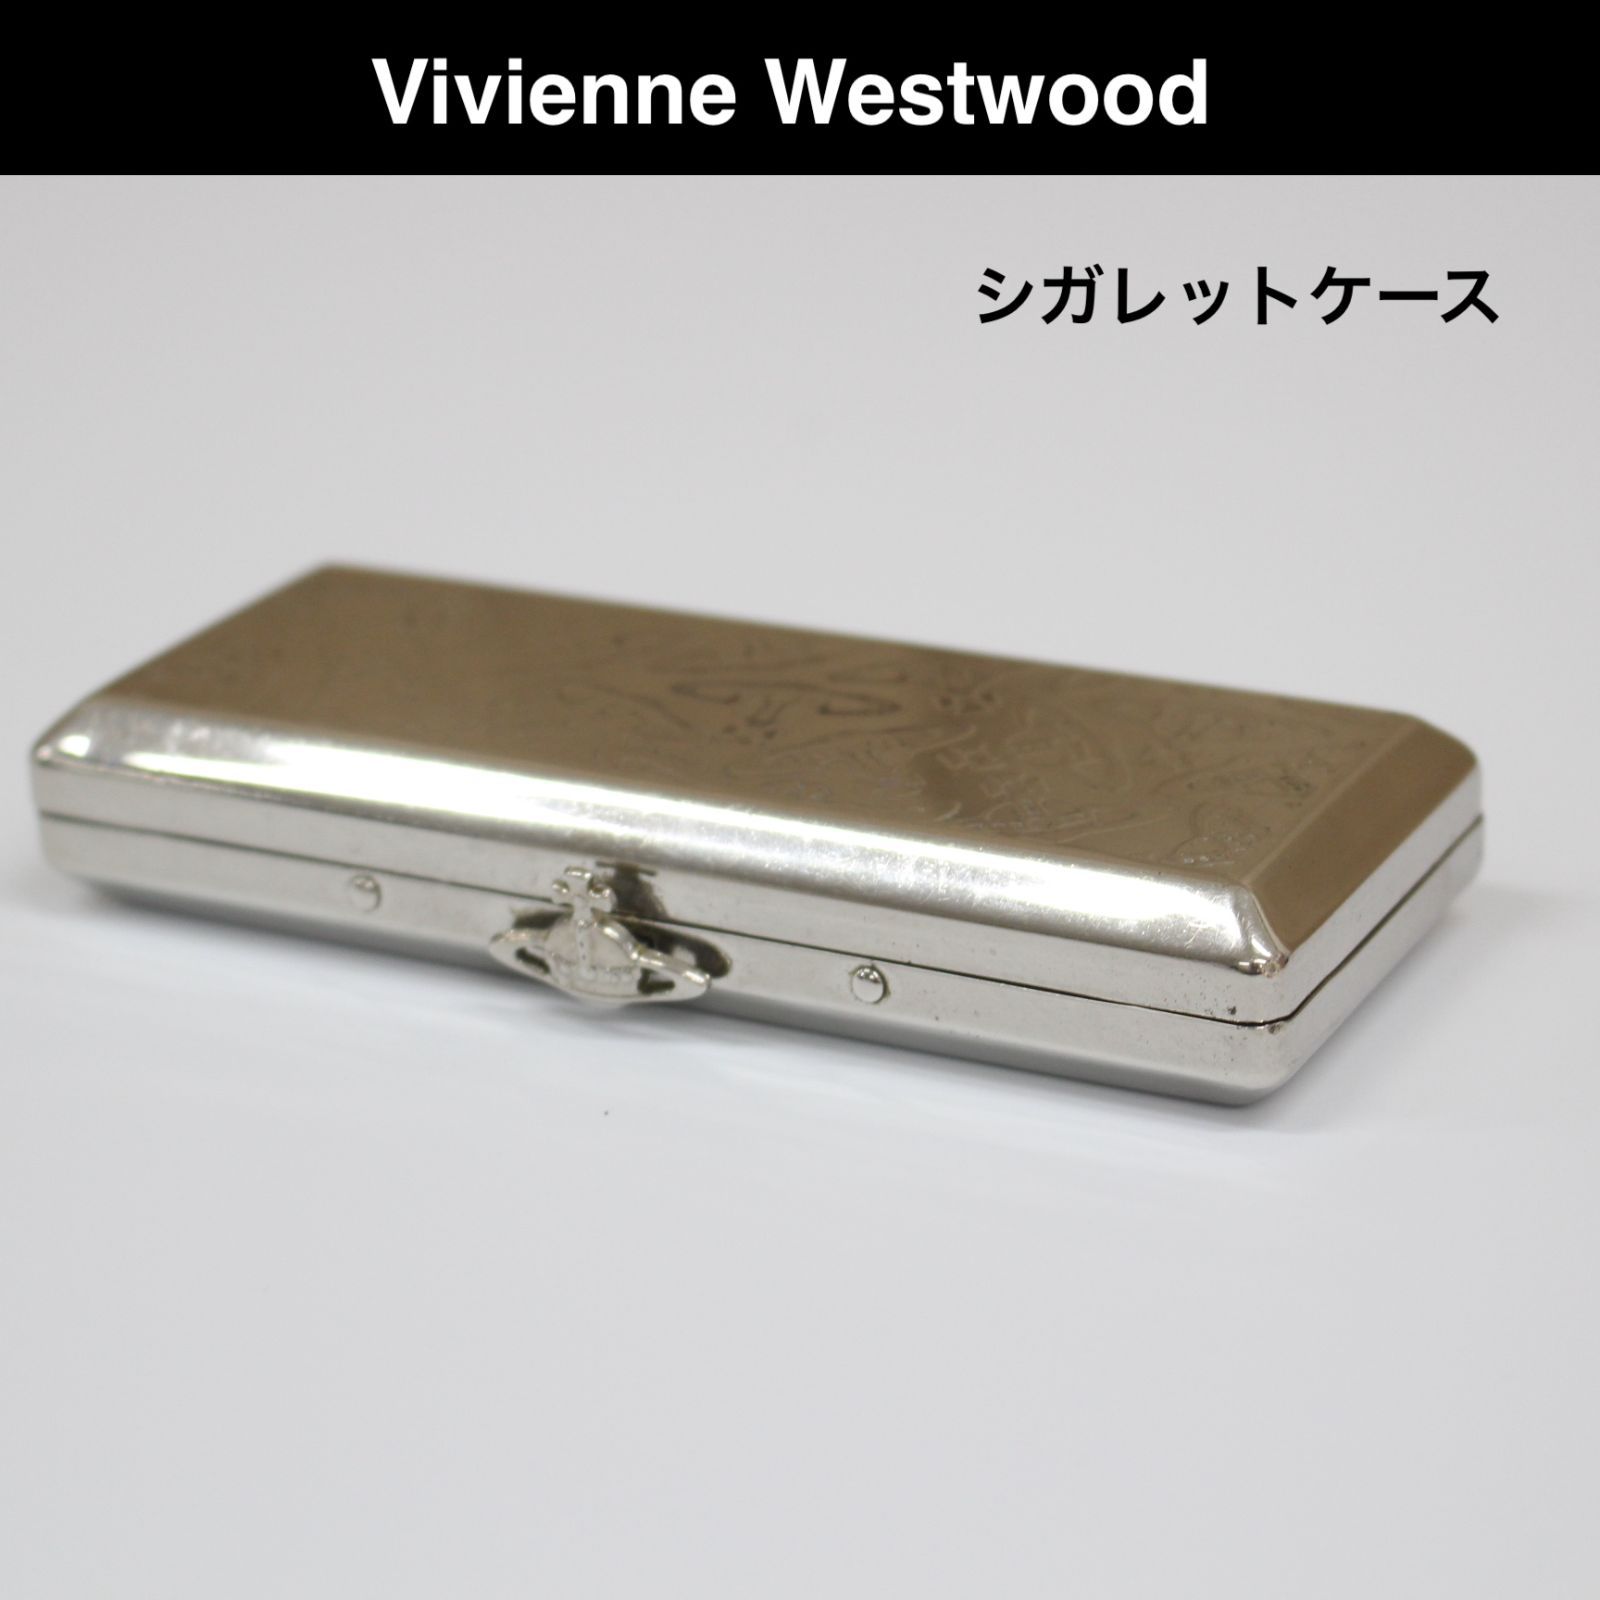 A73】Vivienne Westwood メタルスリムORBシガレットケース